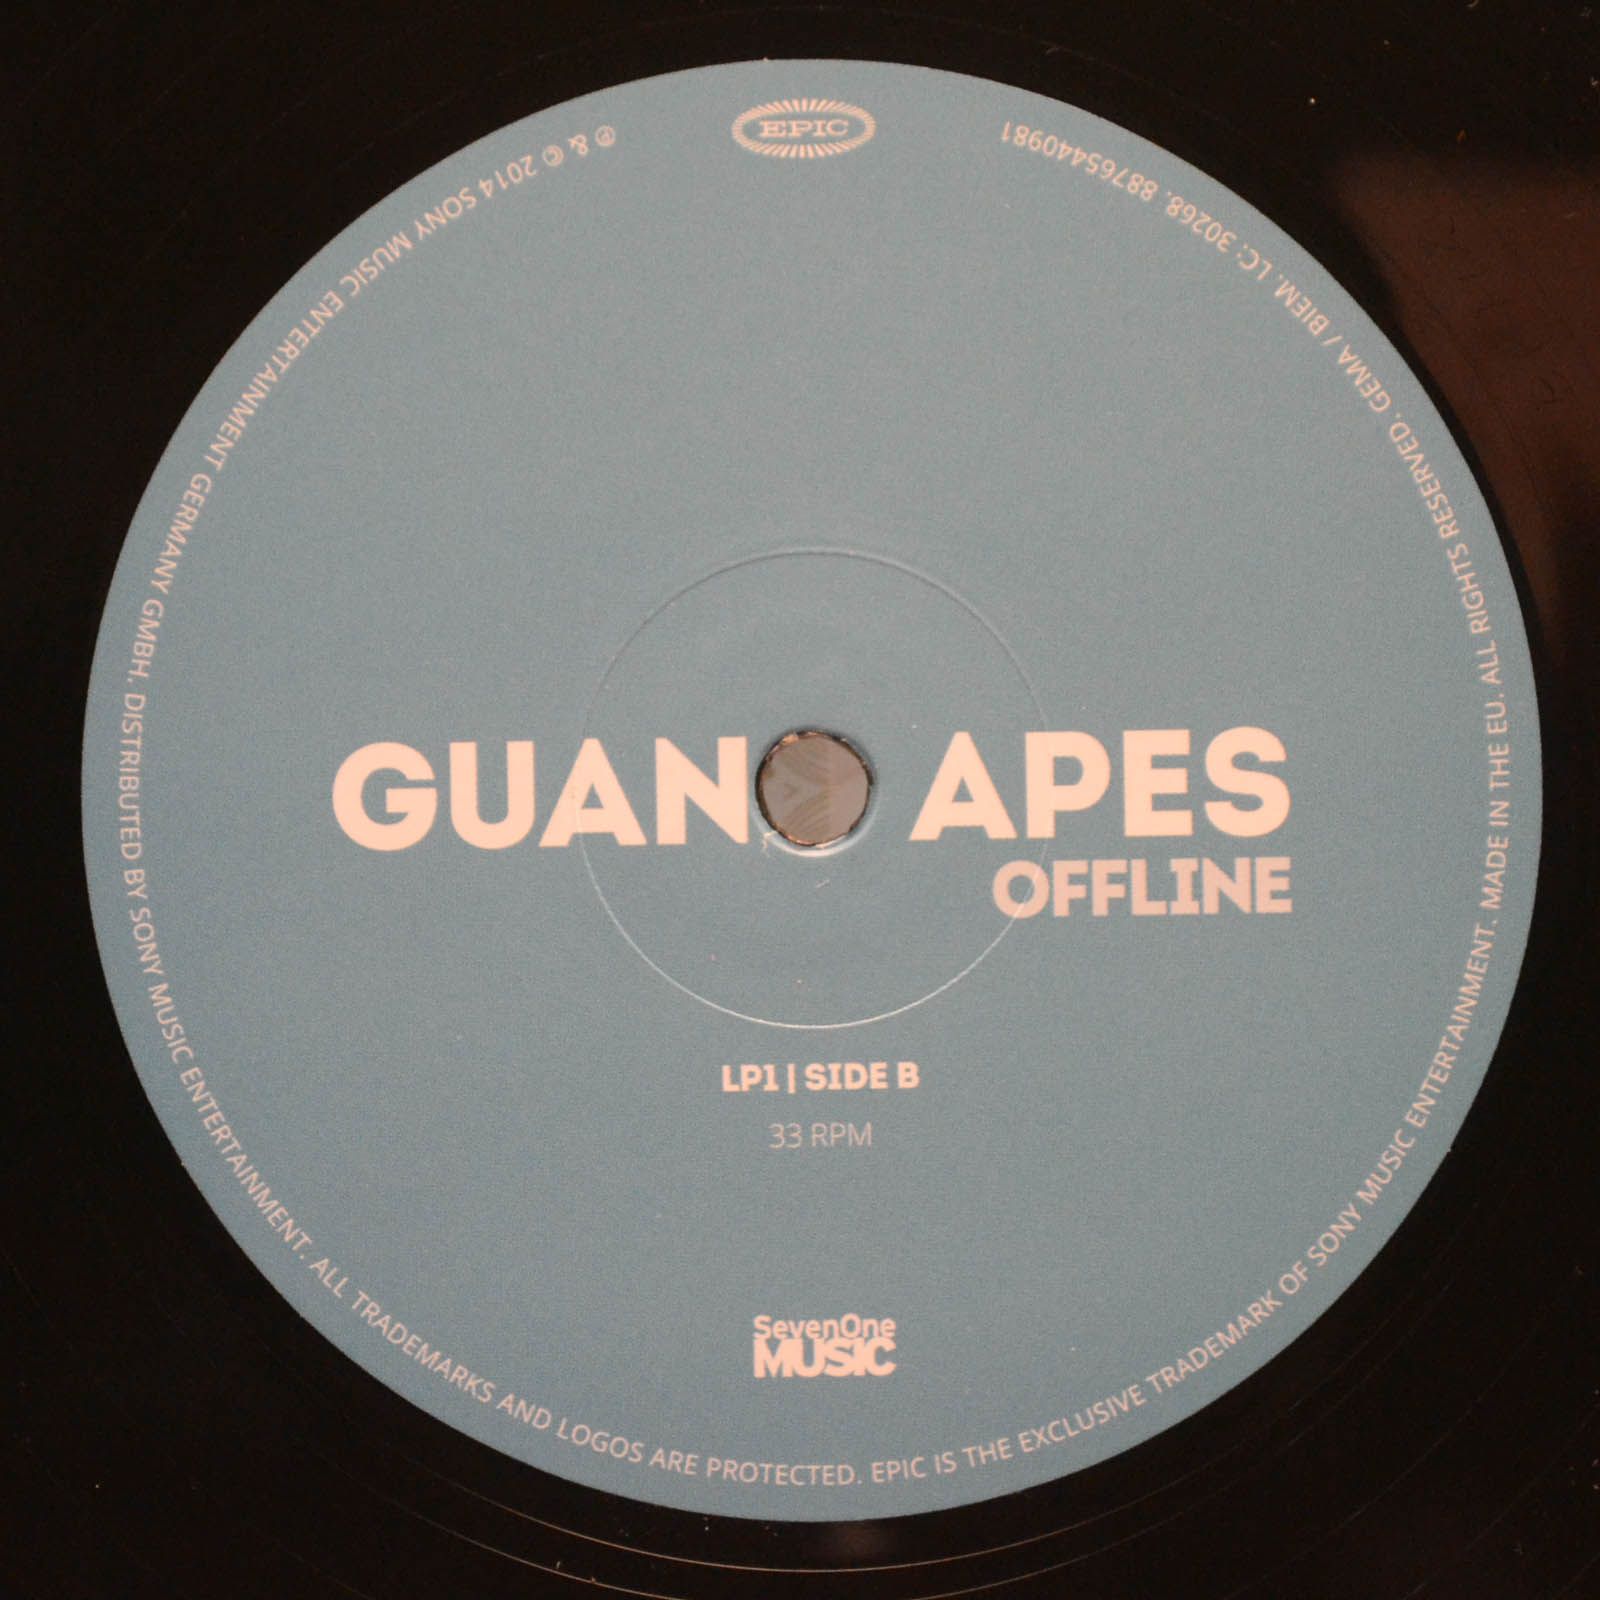 Guano Apes — Offline (2LP), 2014